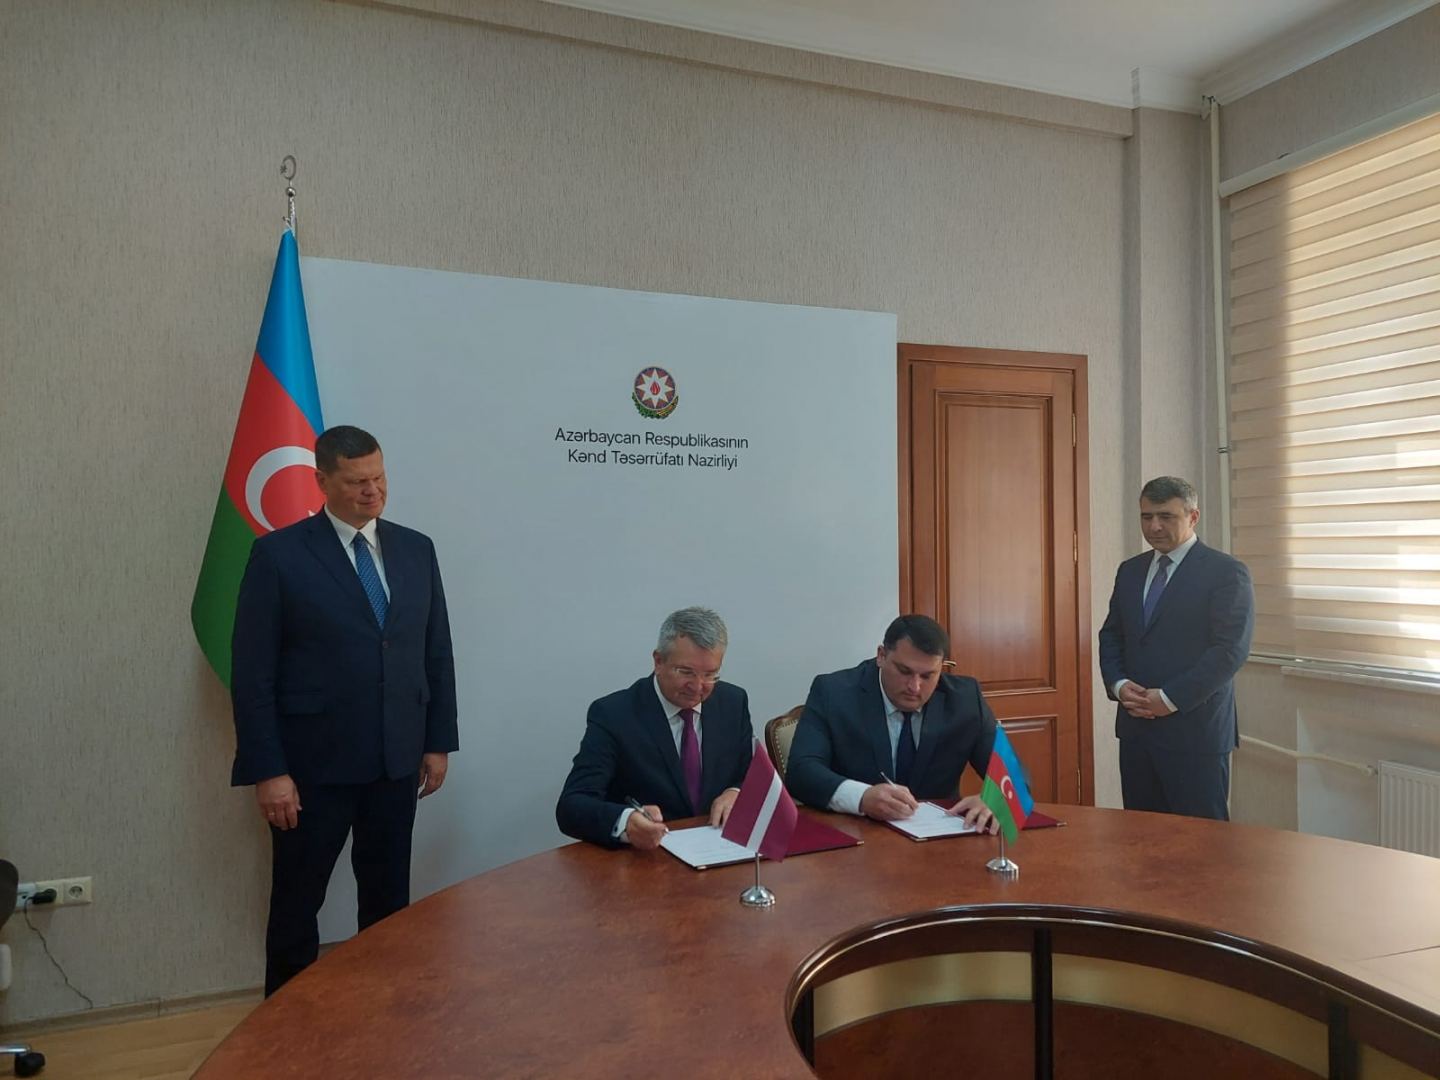 Azerbaijan's Vegetable Institute, Latvian Life Sciences University sign MoU (PHOTO)